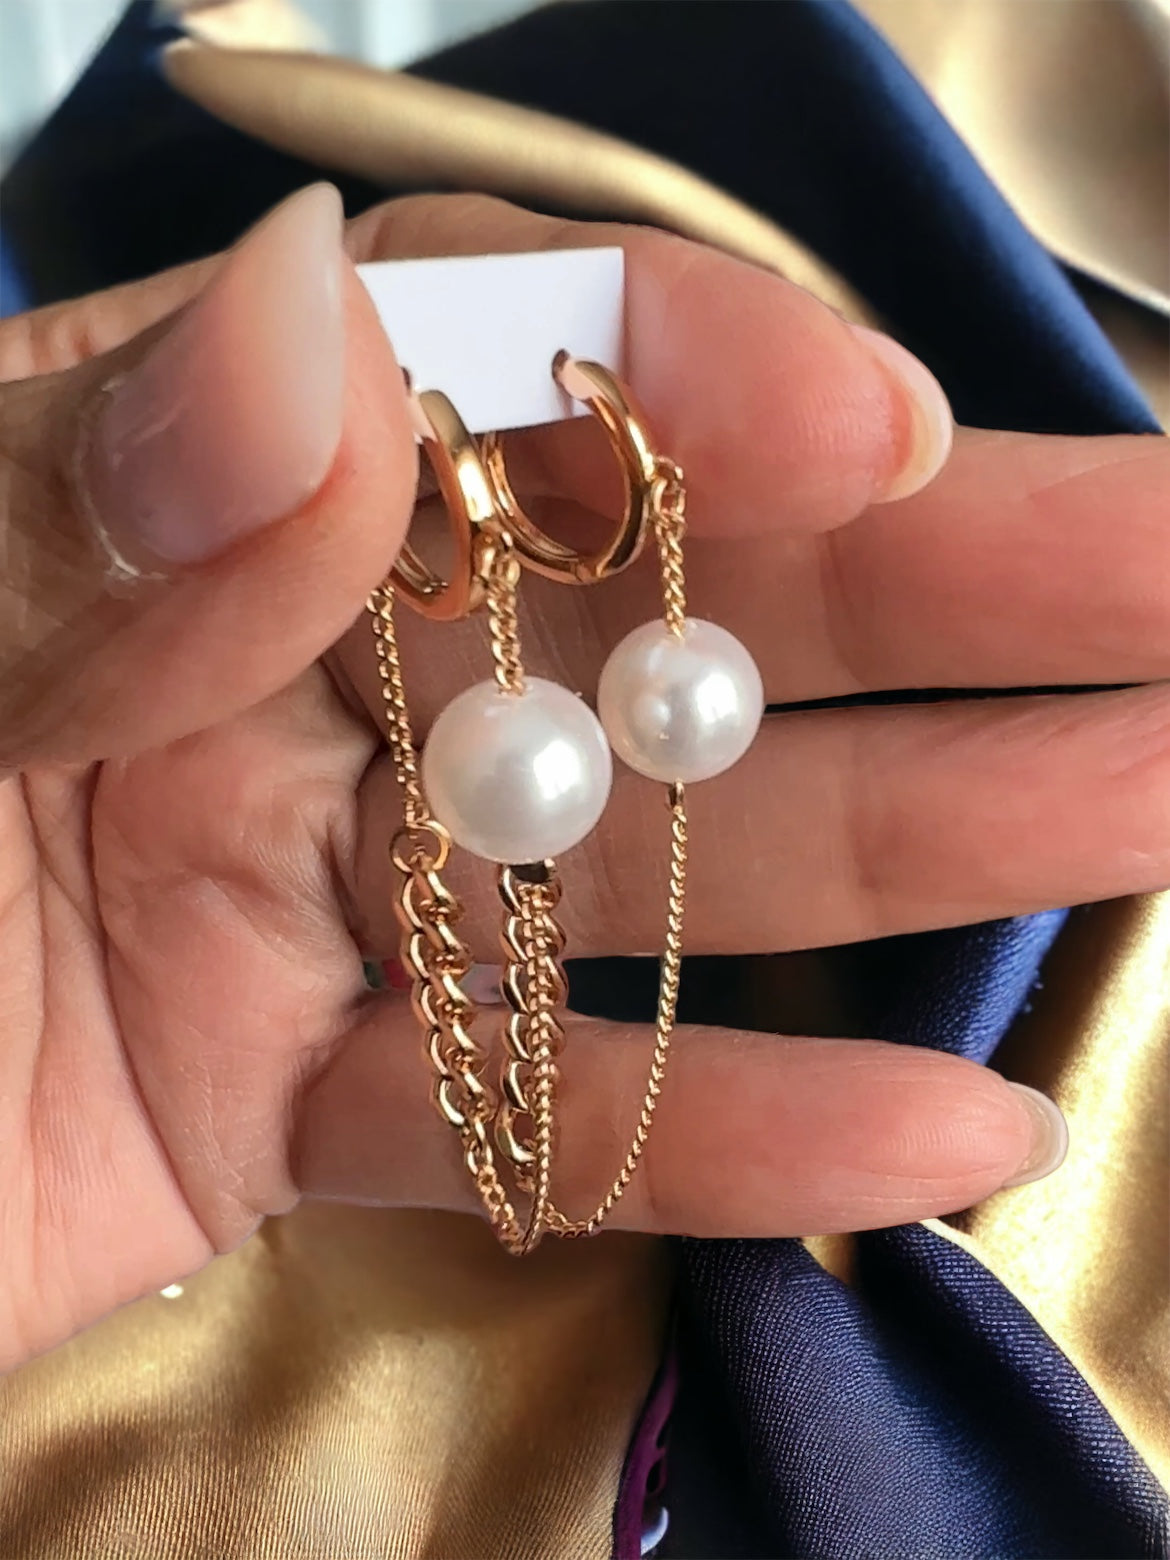 Pearl drop earrings 
Pearl and chain dangling earrings 